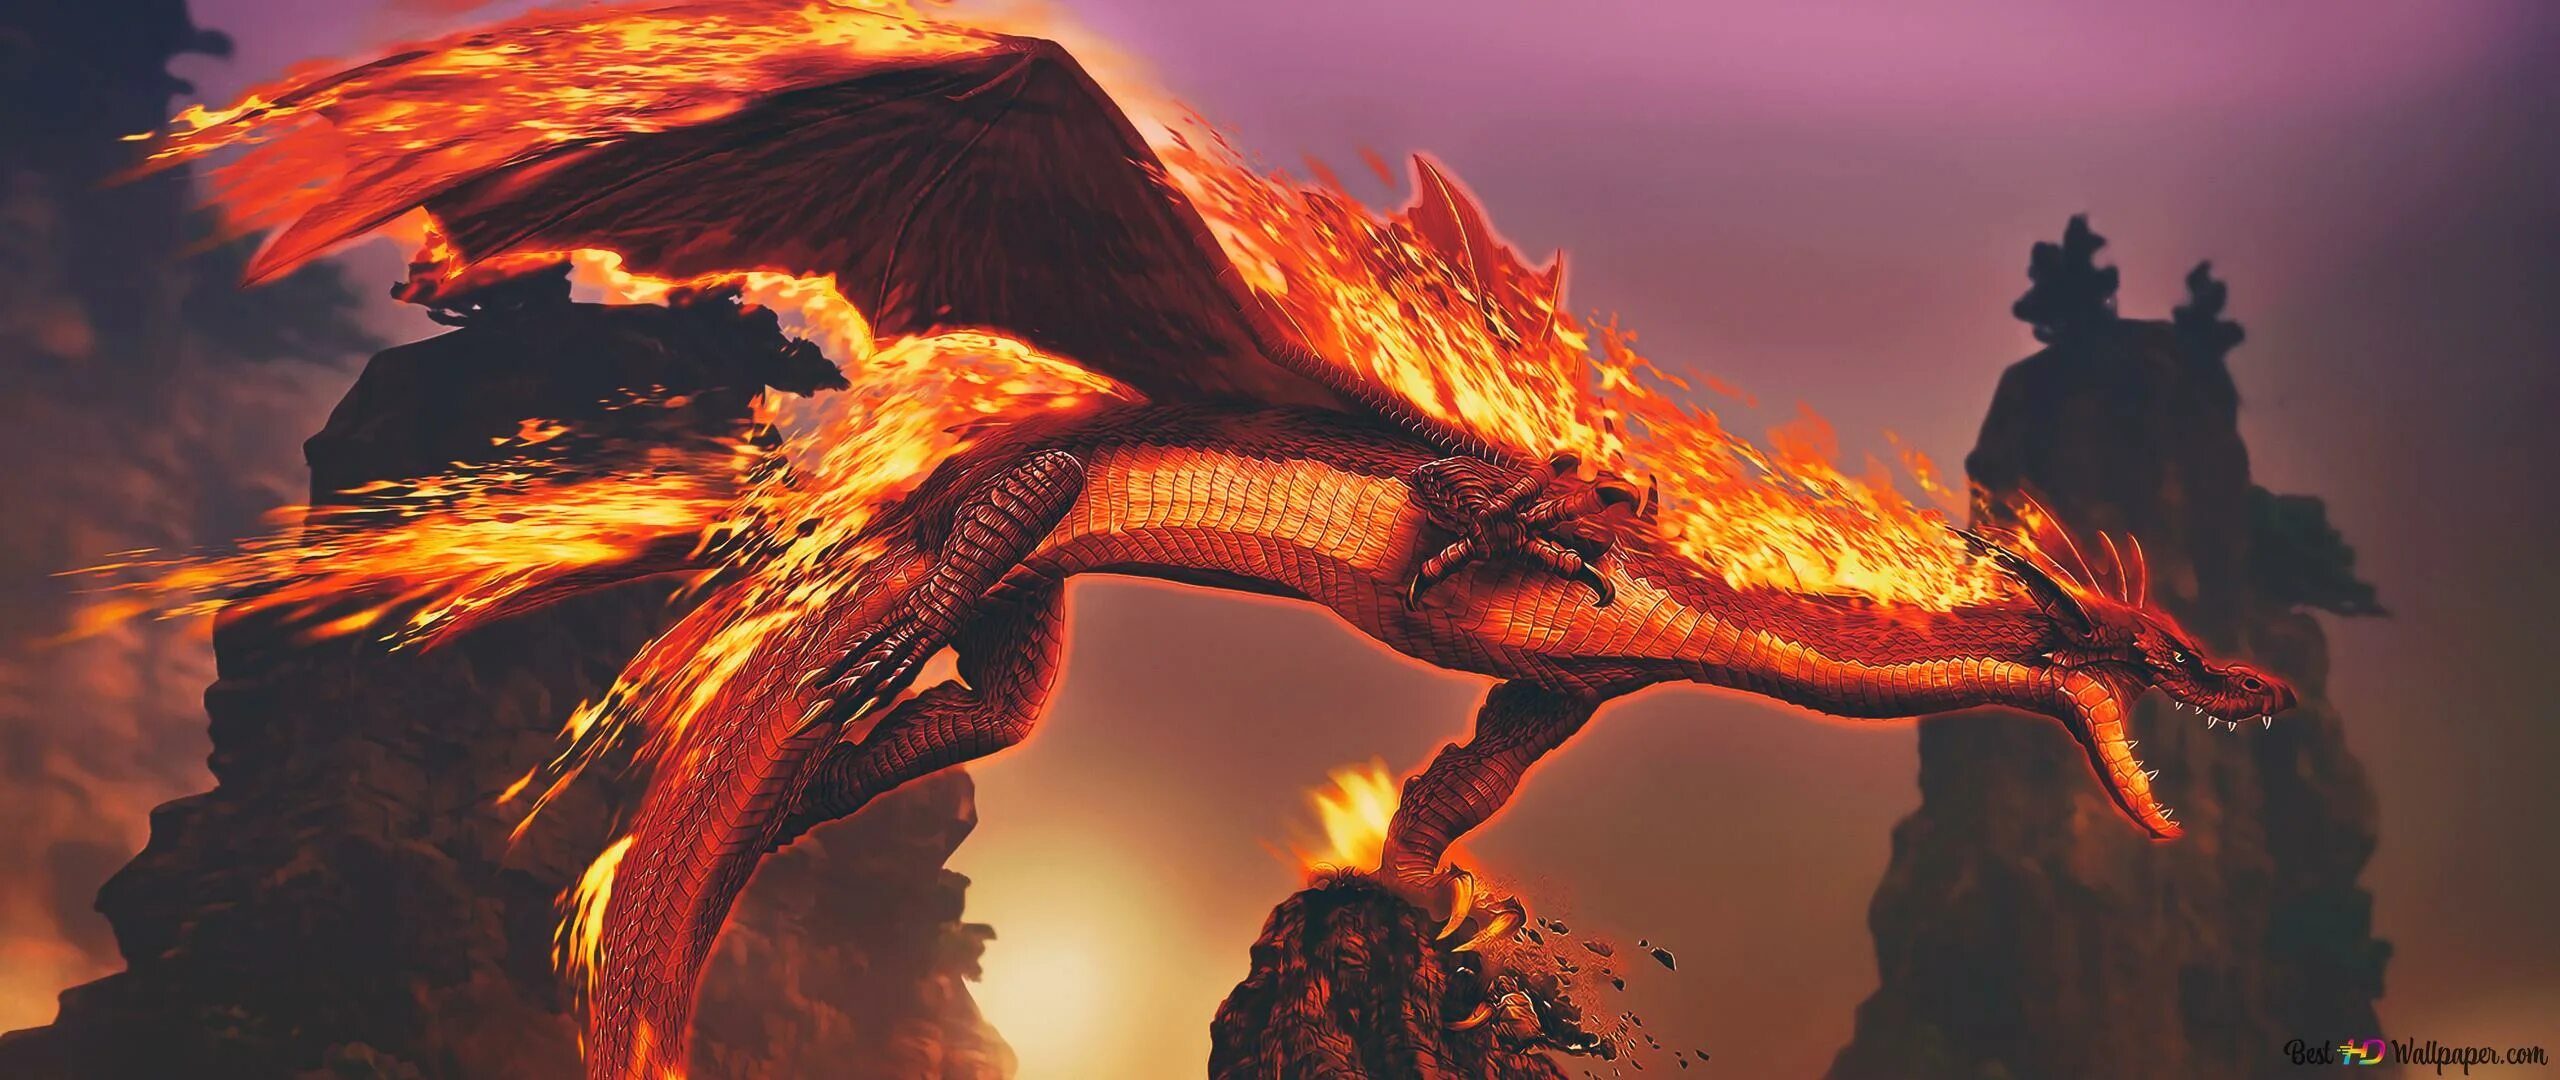 Дракон изрыгающий пламя. Огненный дракон Гондолина. Аркат дракон огня. Пламенный дракон. Дракон темного пламени